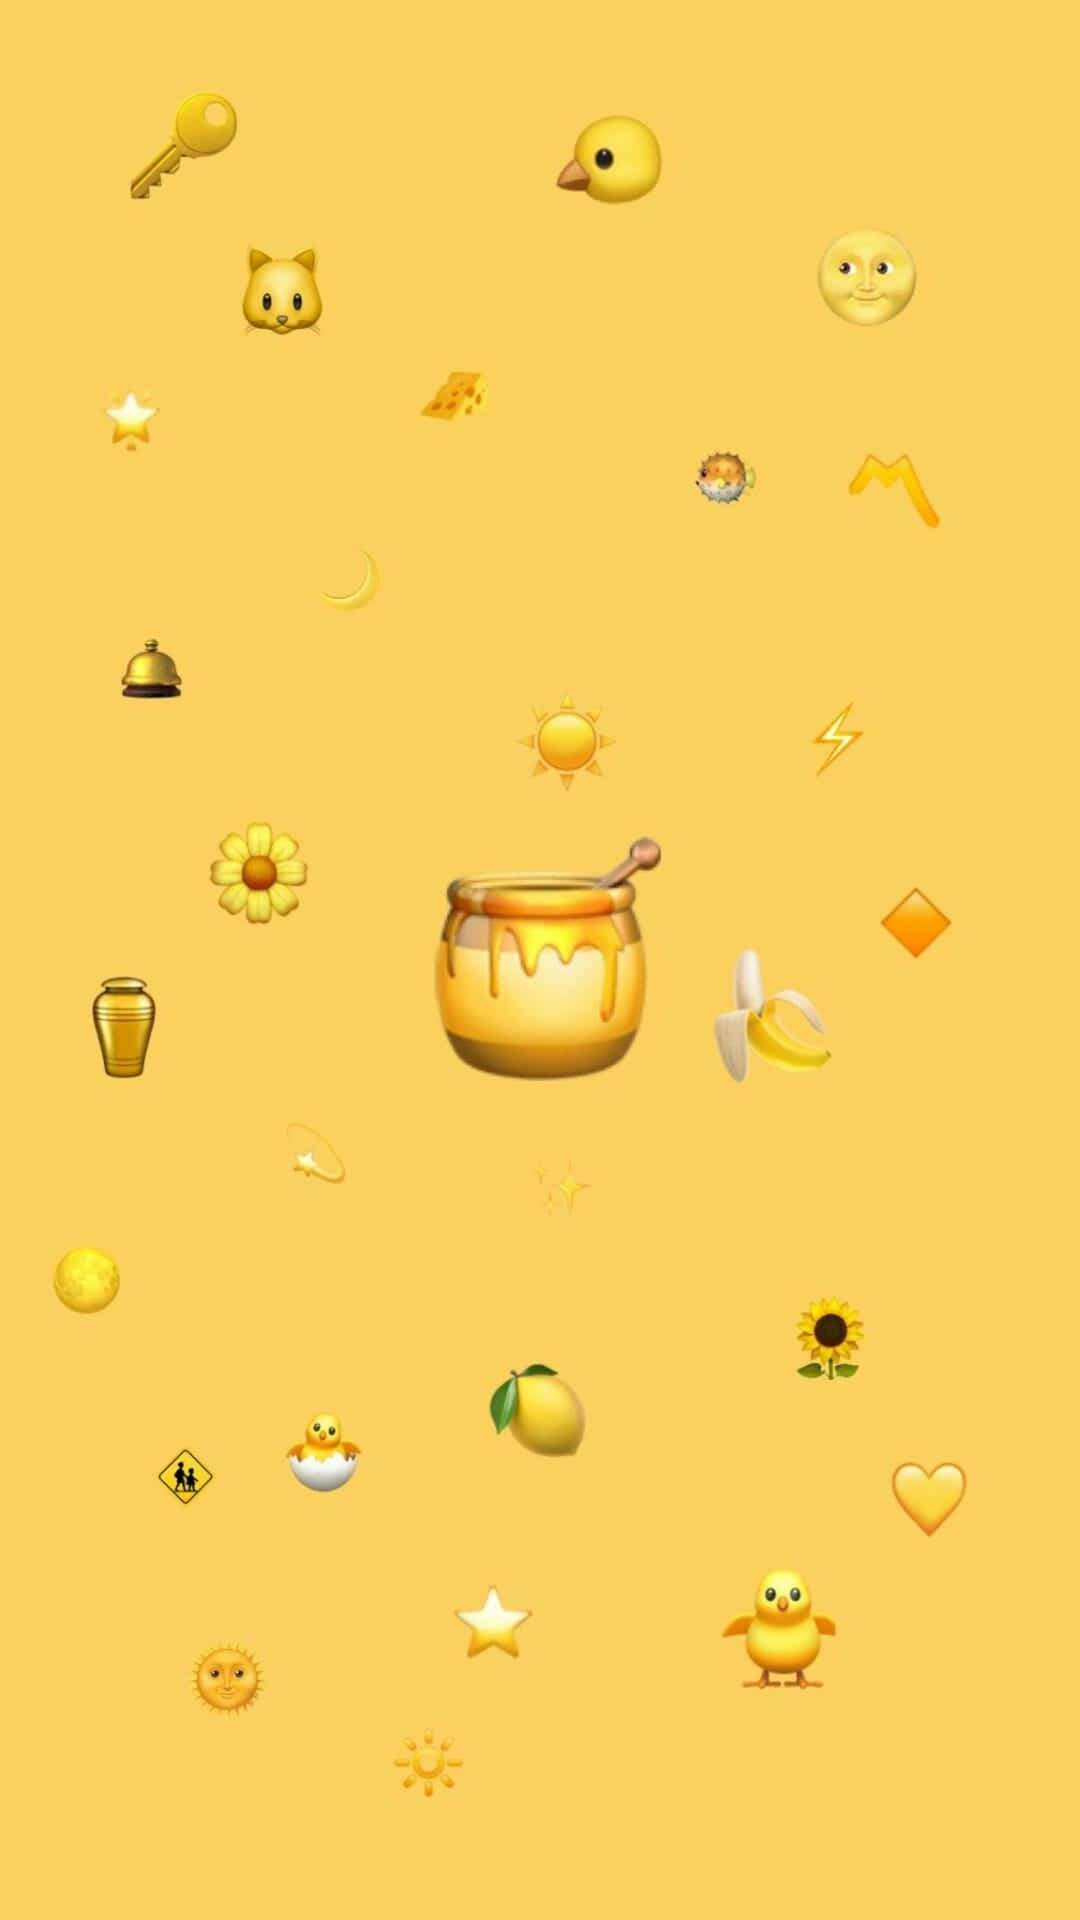 Aesthetic emoji wallpaper for phone with yellow background - Emoji